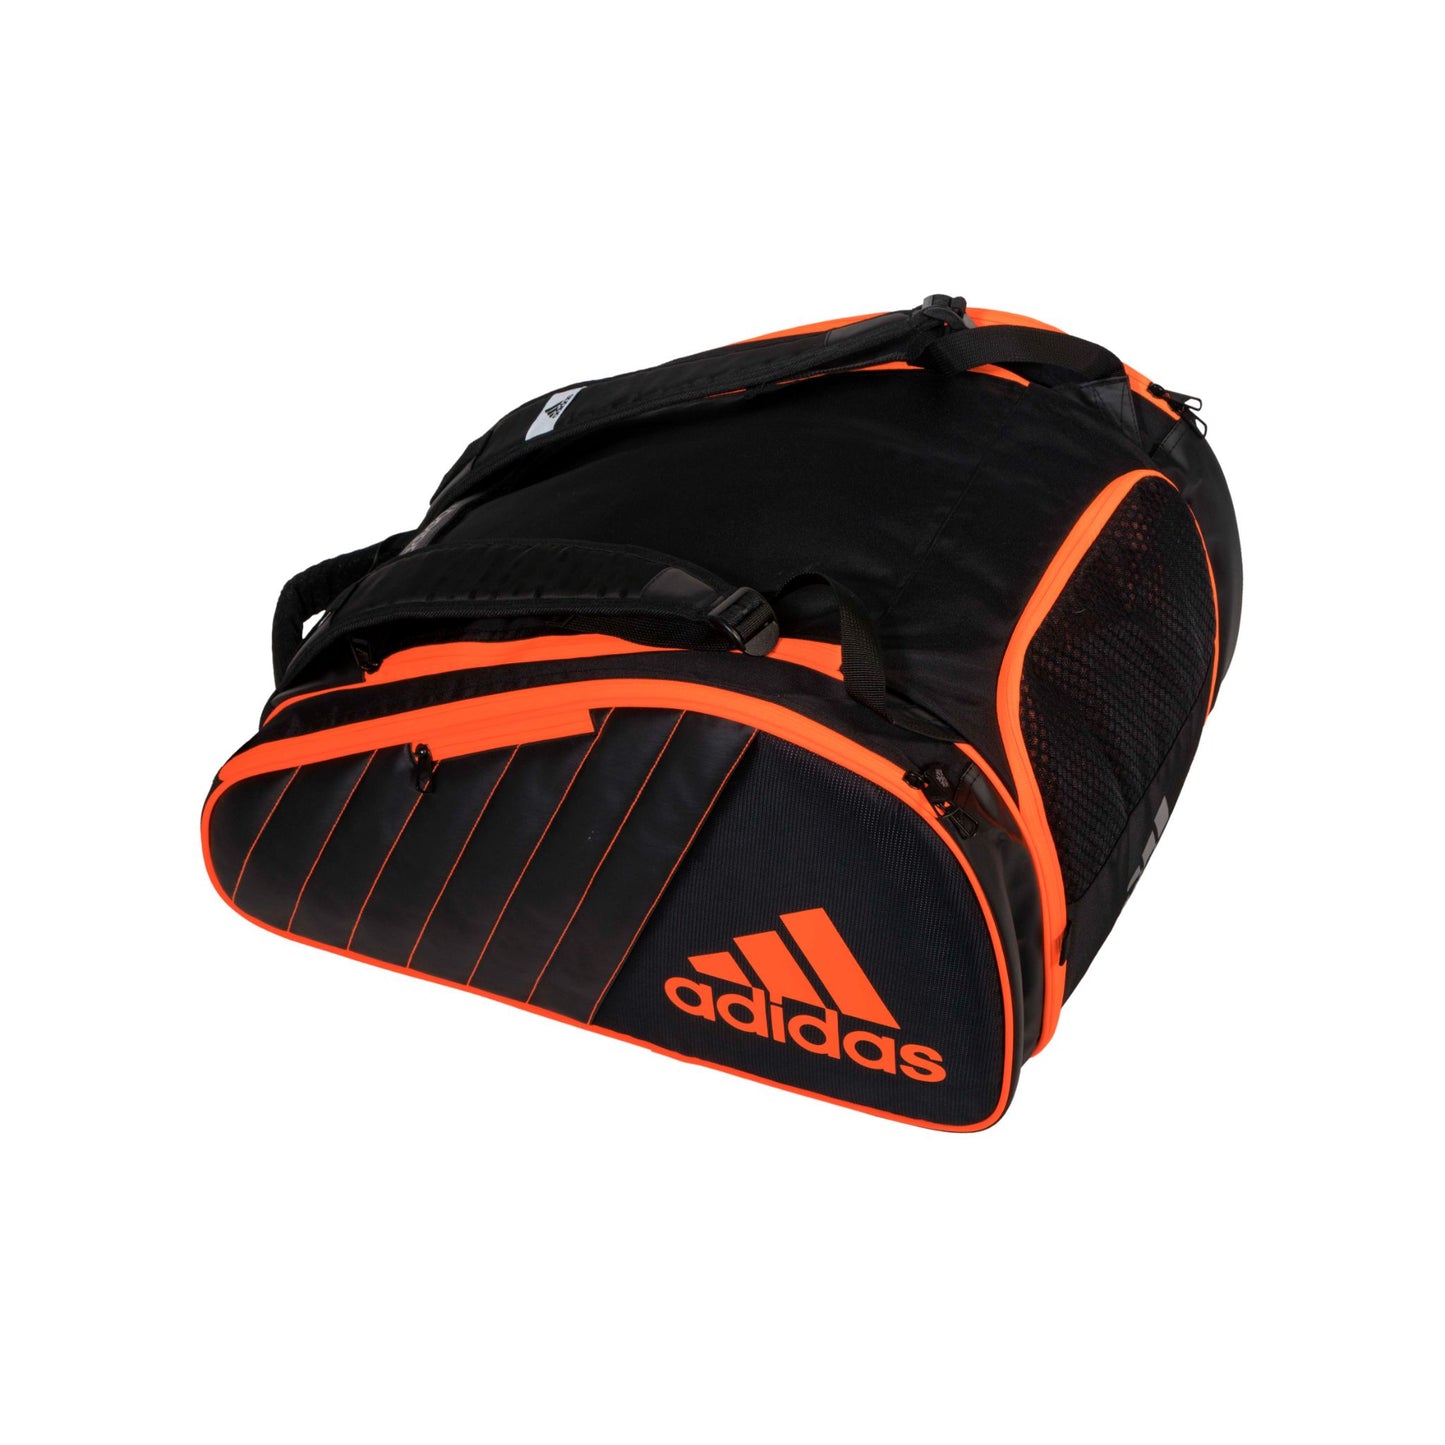 Adidas Protour Racket Bag - Orange-Top